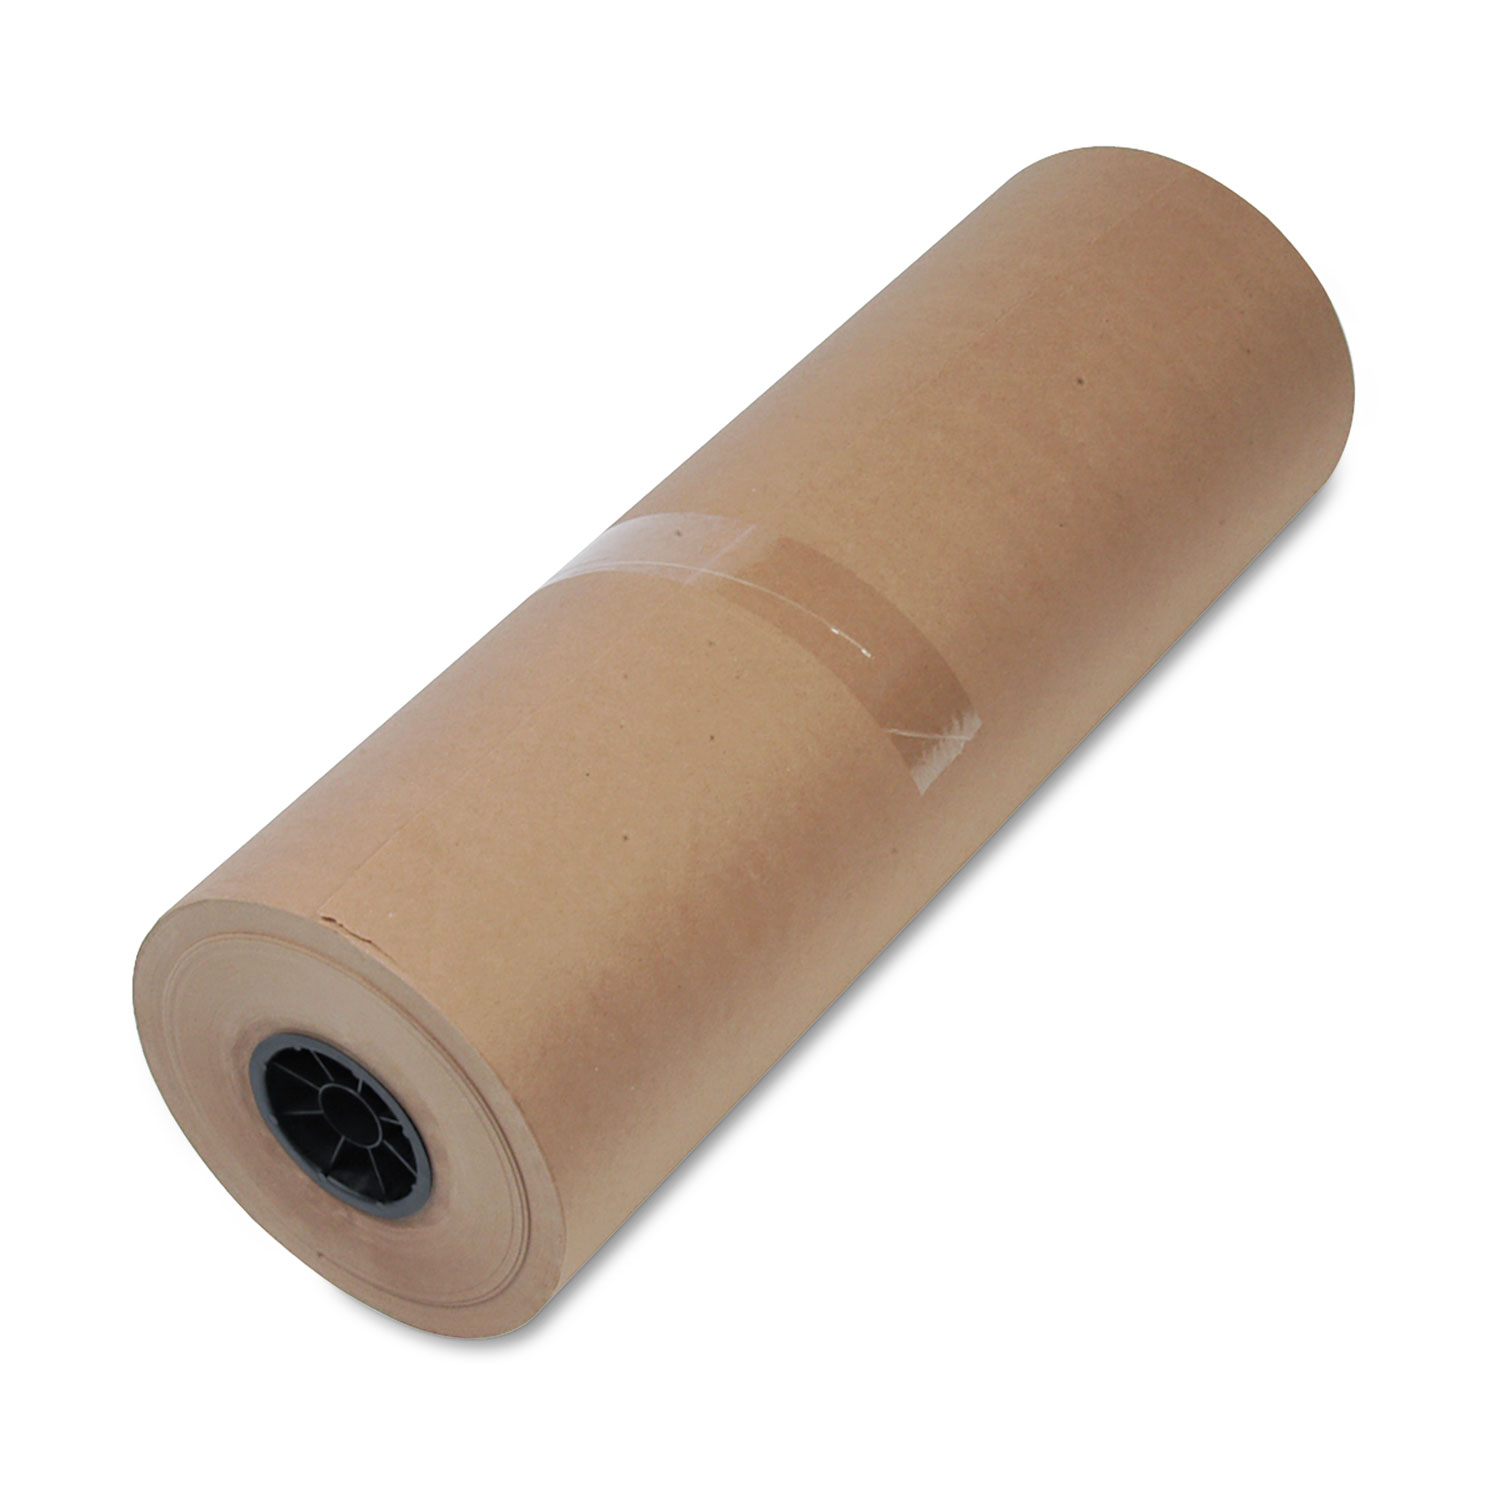 24 in x 900 ft Kraft Paper Roll Wholesale | Brown | POSPaper